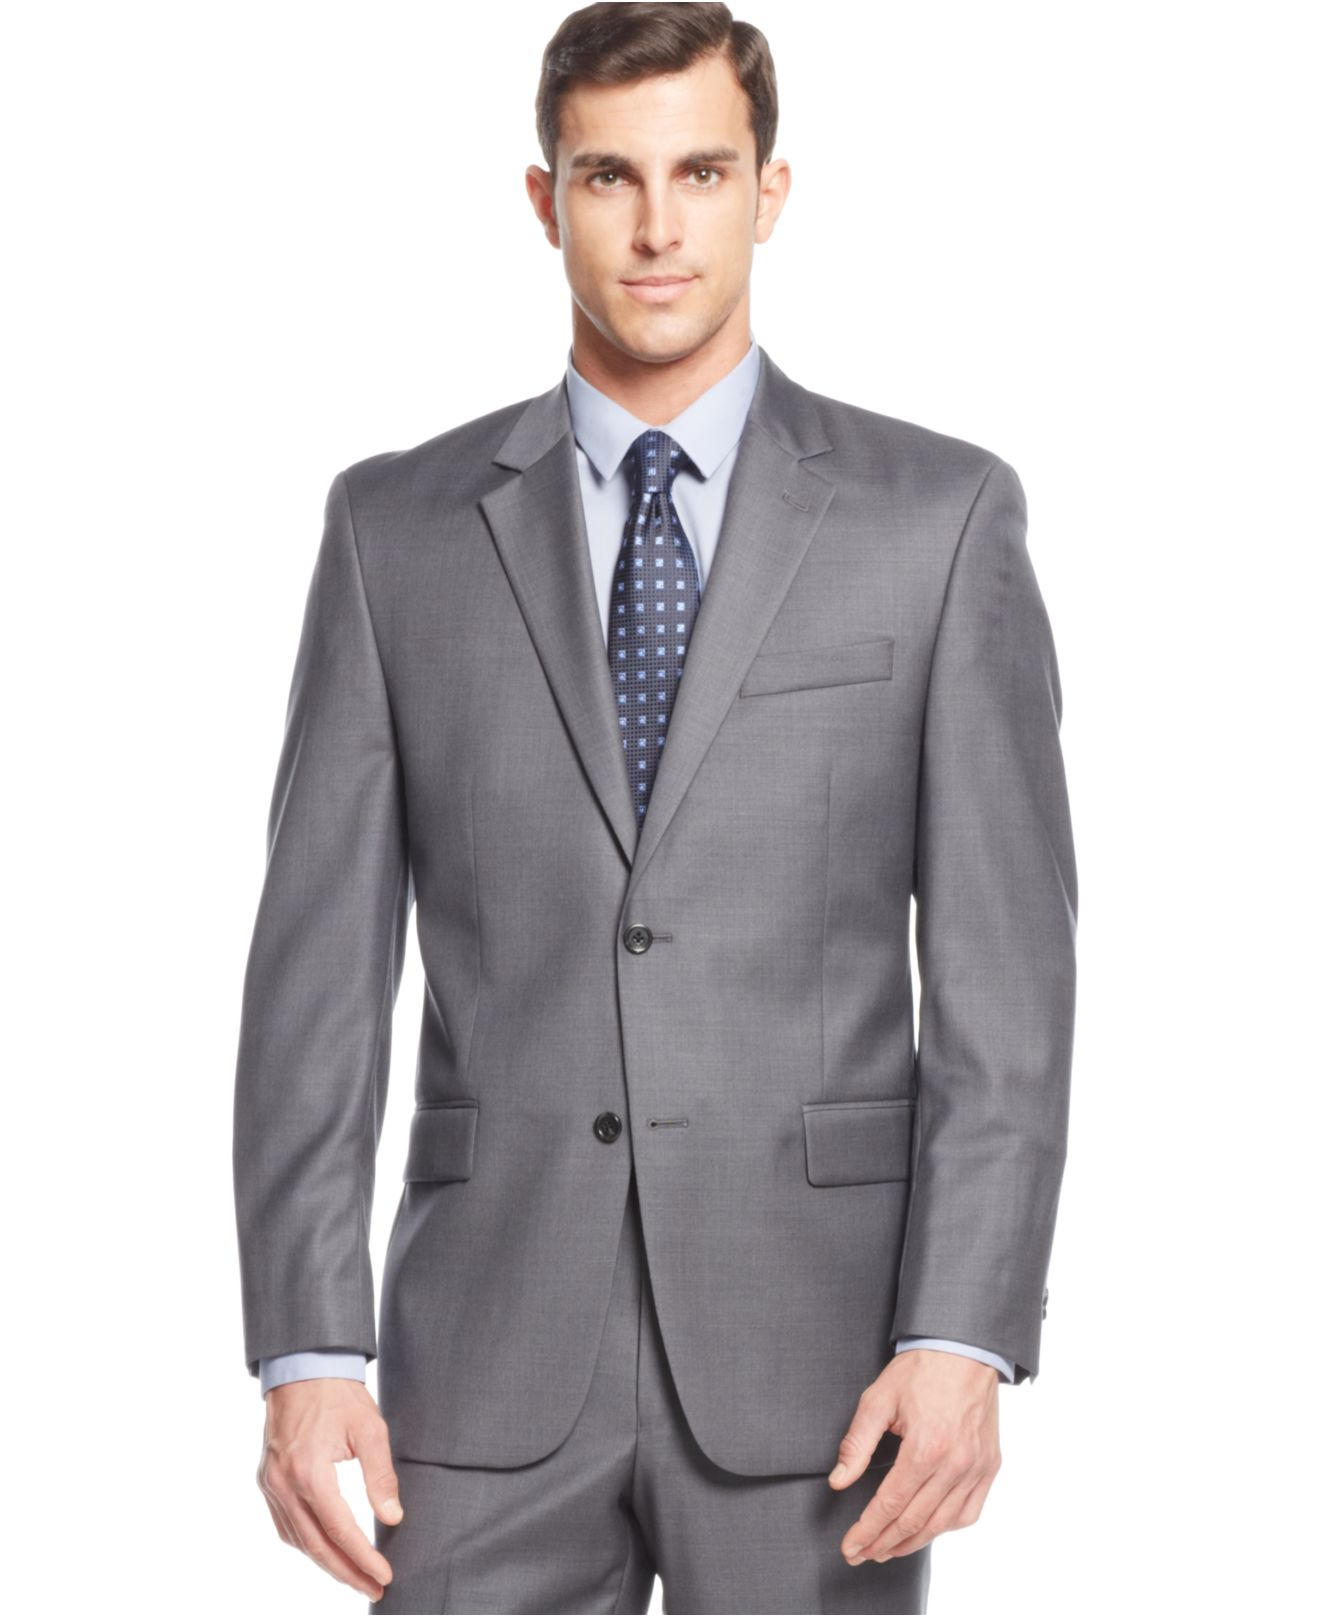 Lyst - Michael Kors Michael Solid Grey Suit in Gray for Men